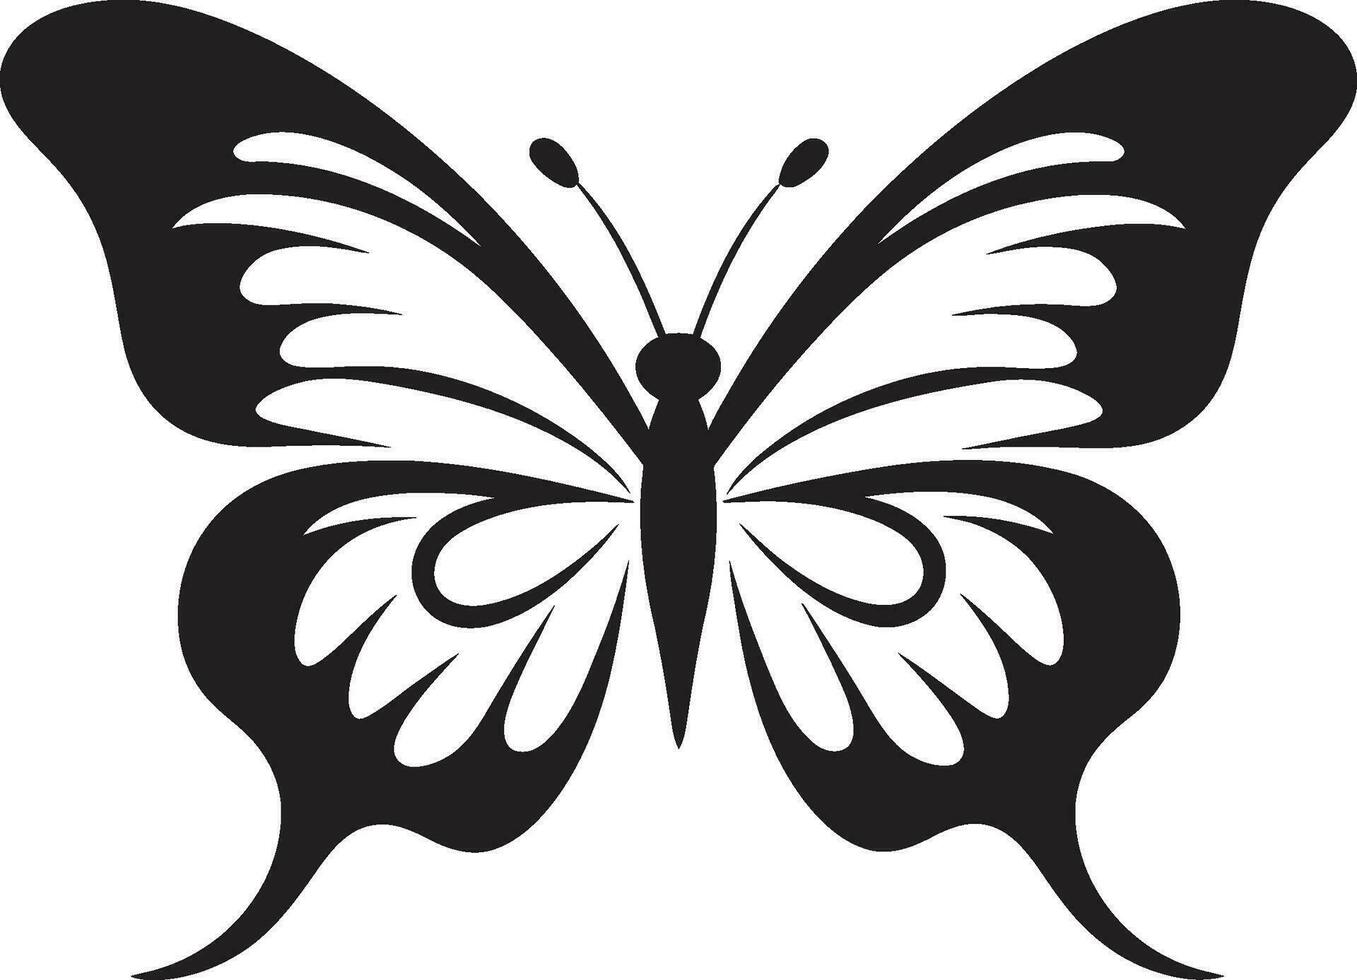 Stygian Spectacle Butterfly Logo in Vector Nightfall Noir Black Butterfly Symbol Design